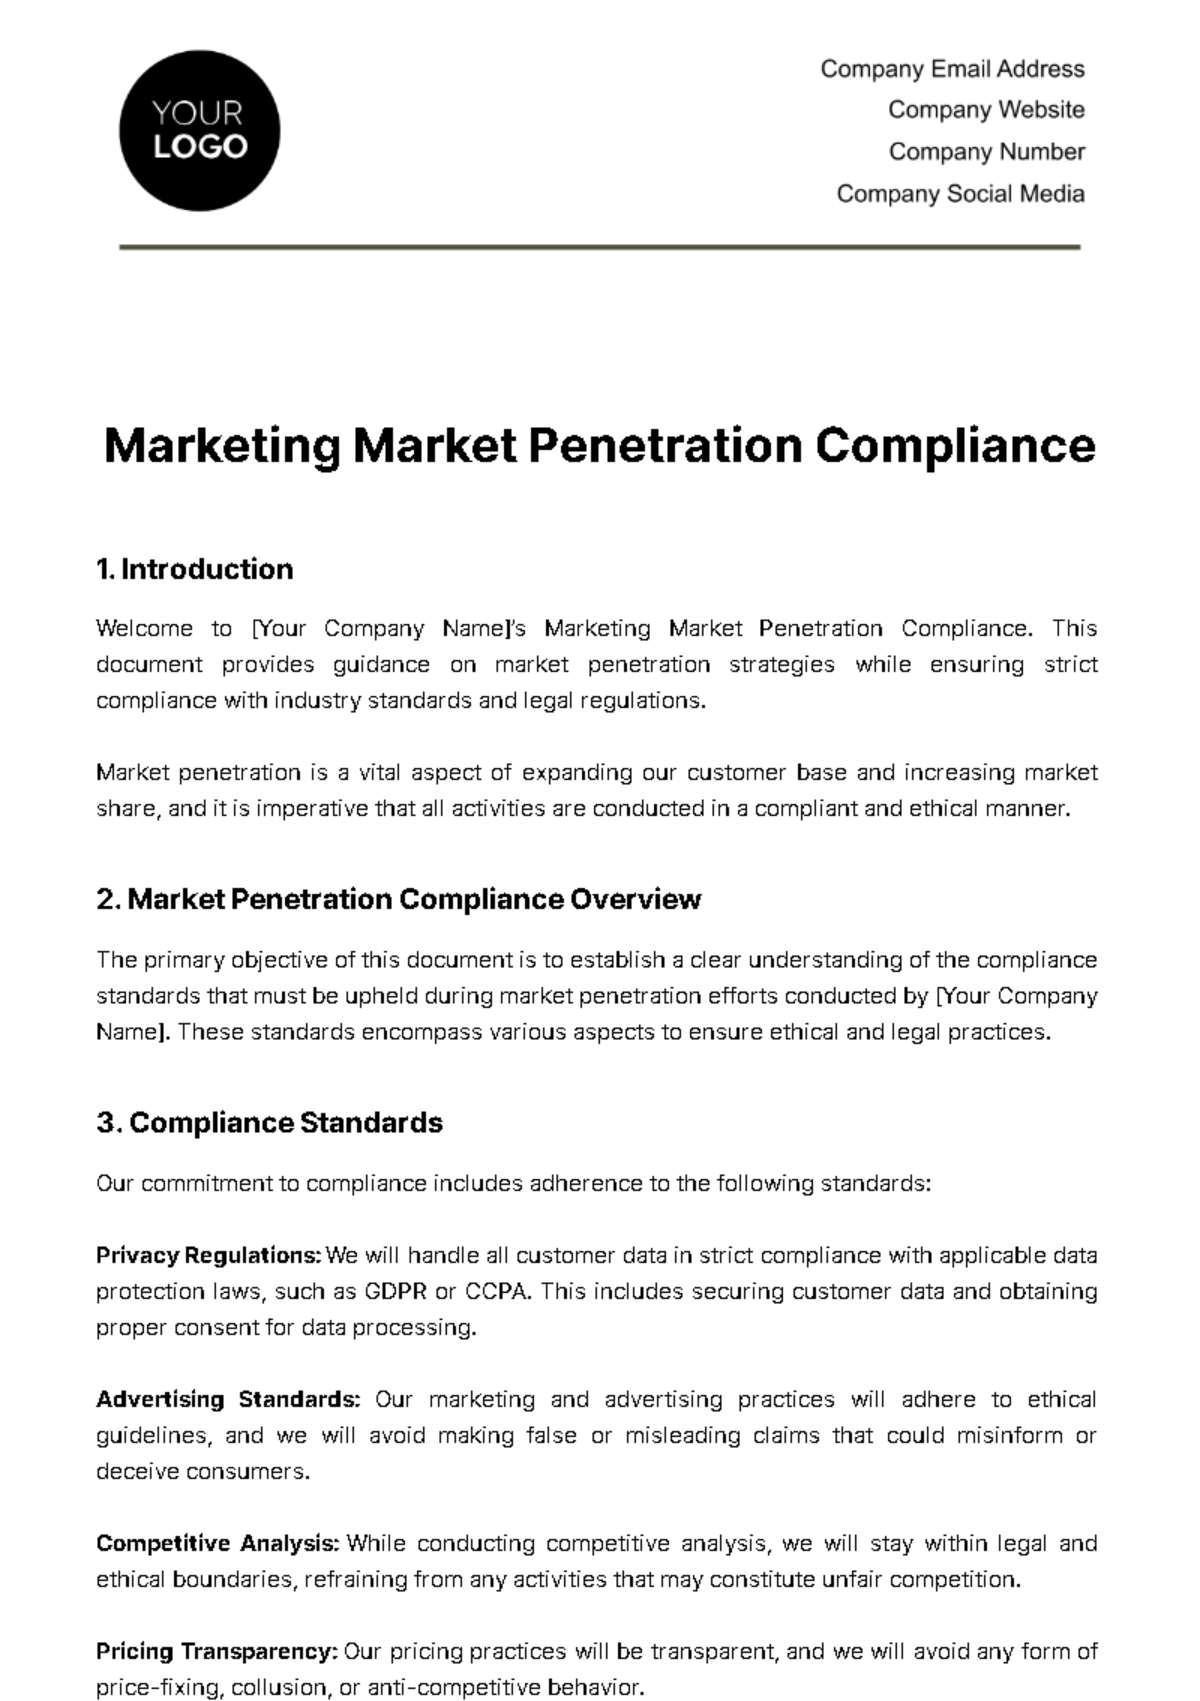 Free Marketing Market Penetration Compliance Document Template